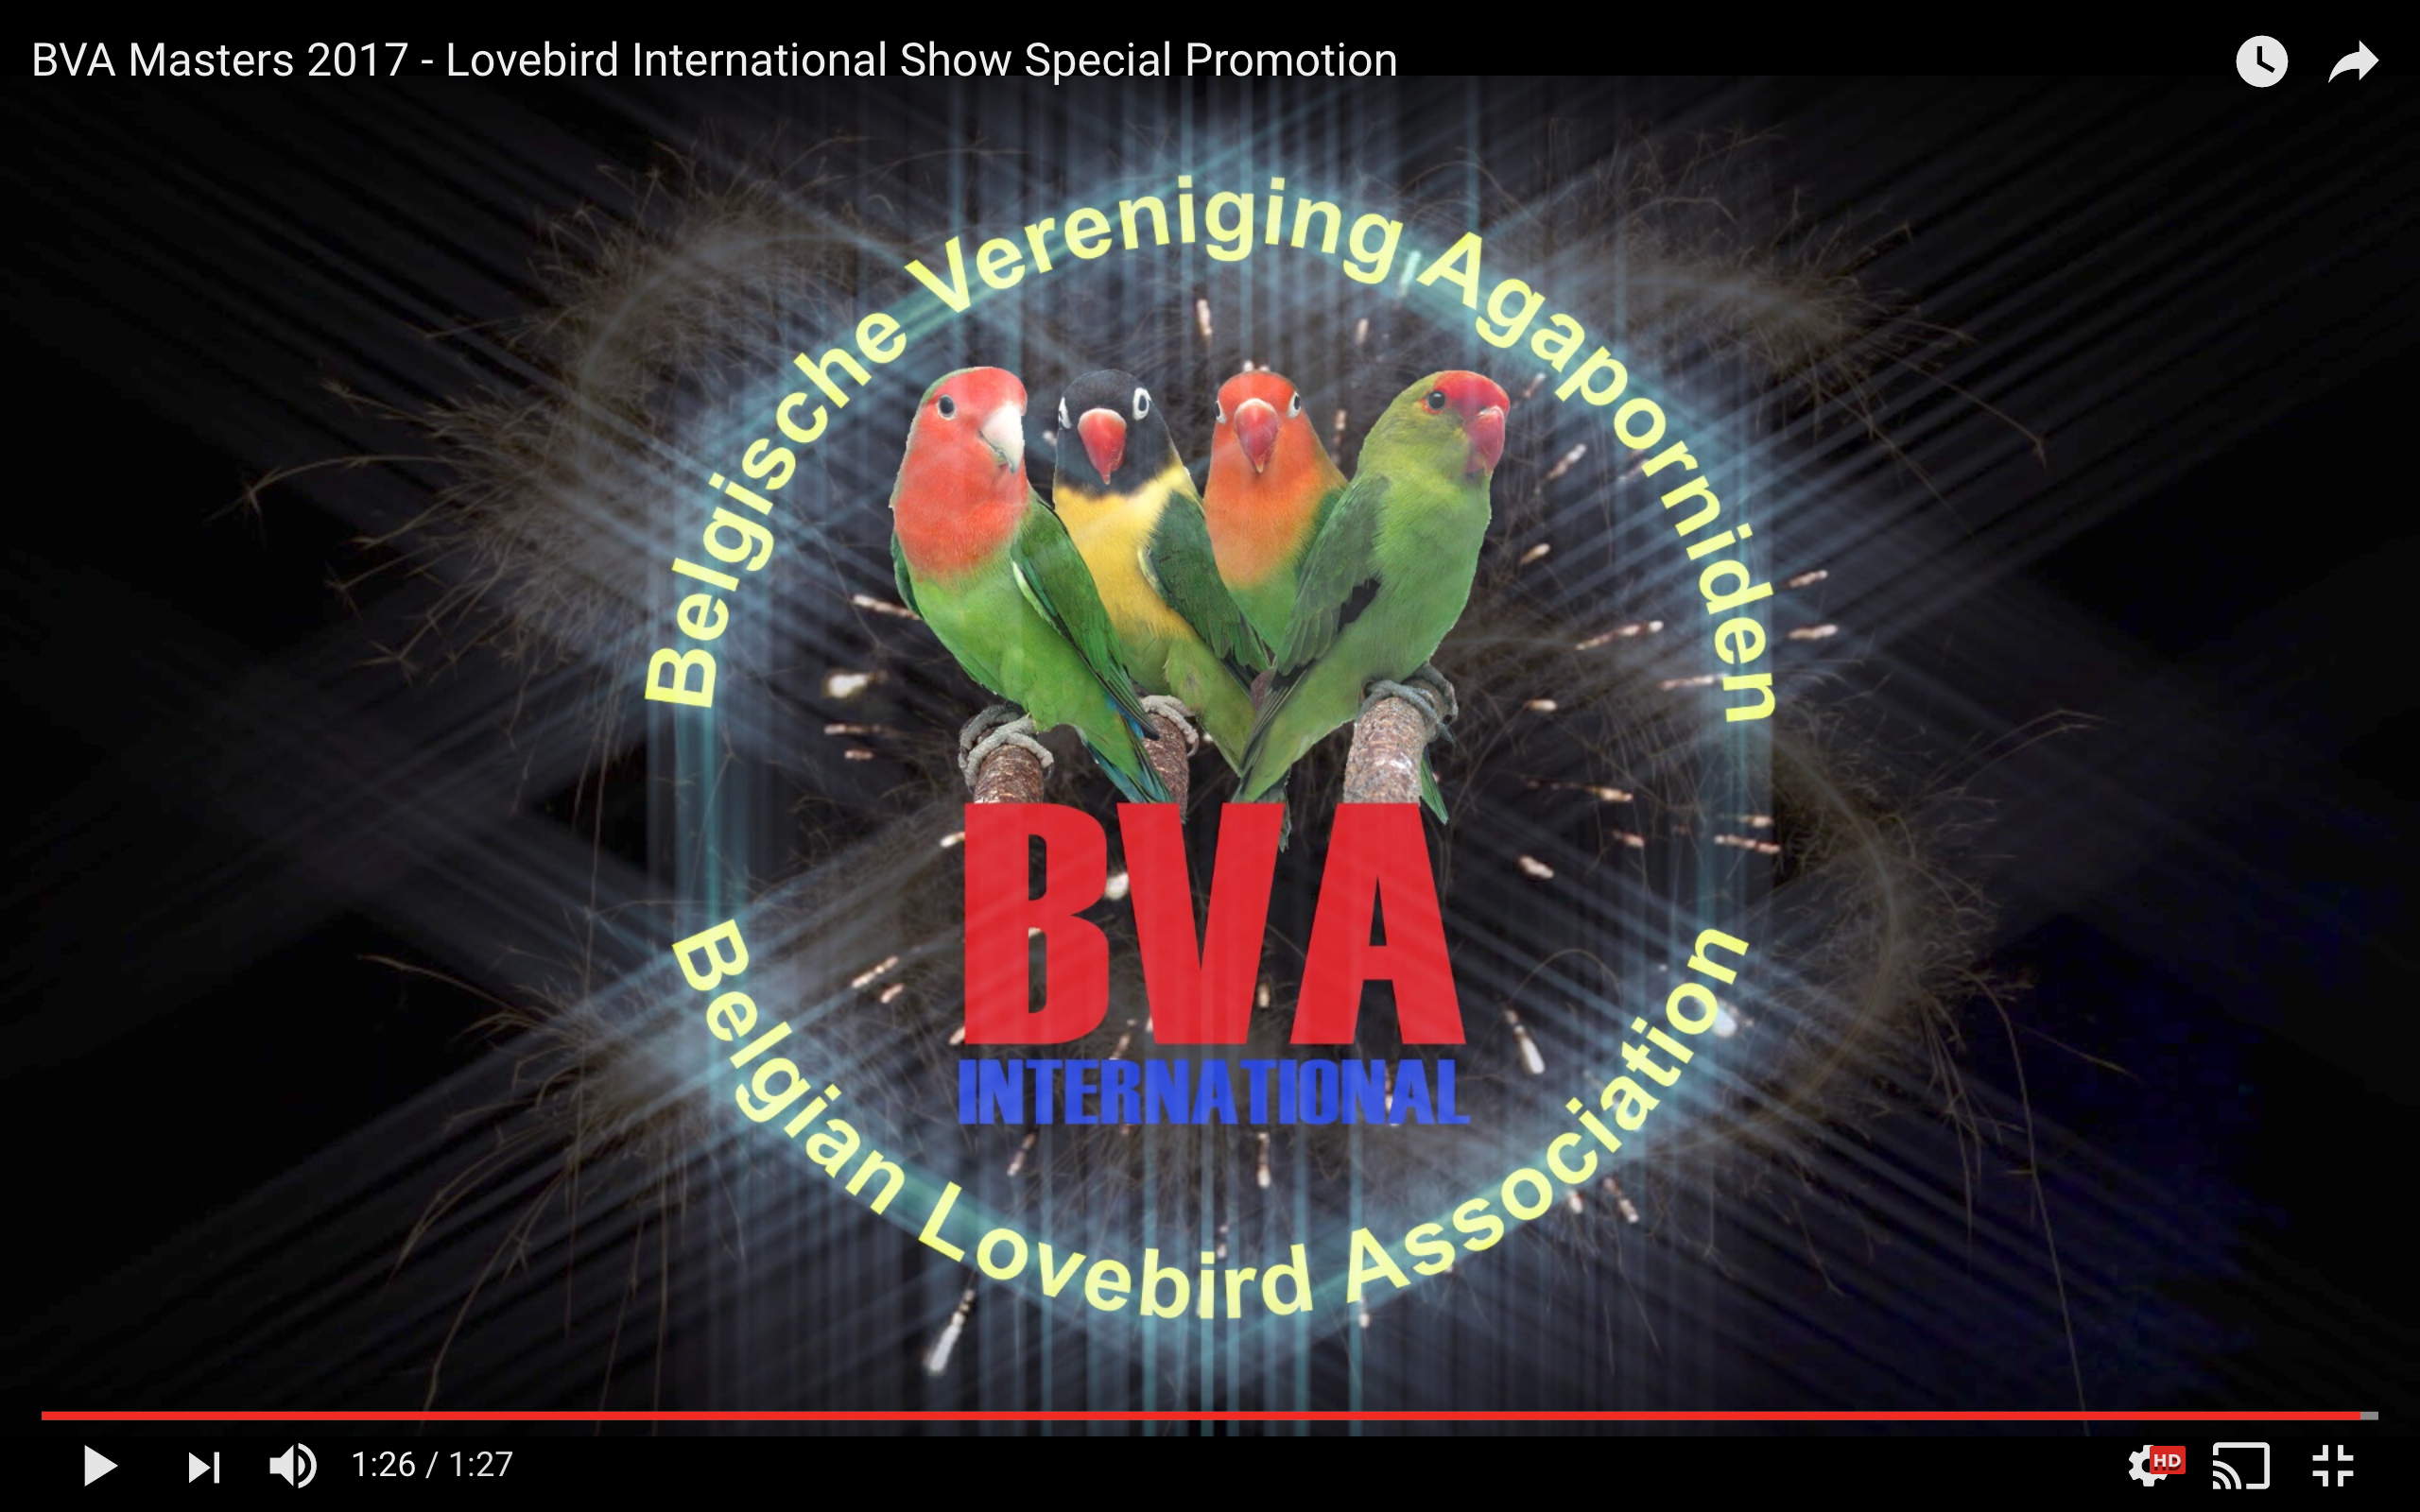 BVA Masters 2017: Lovebird International Show